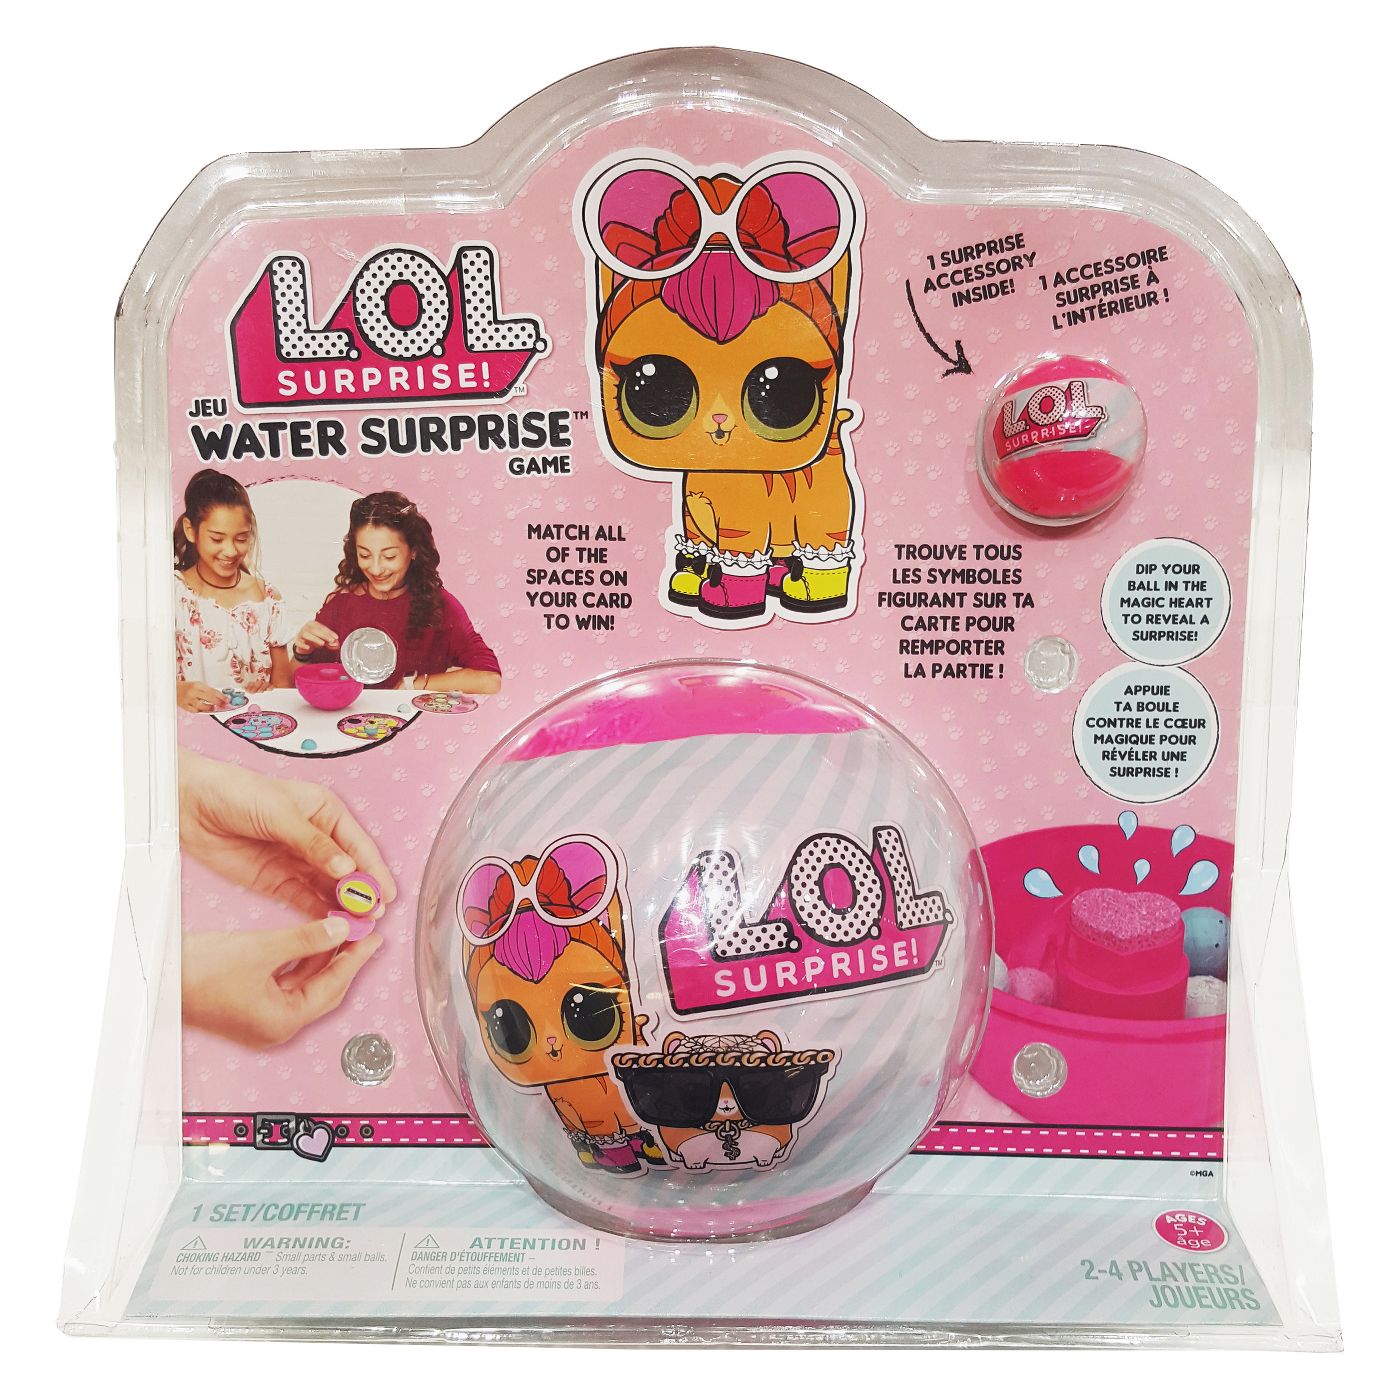 L.O.L. Surprise! Water Surprise Game Includes Surprise Accessory